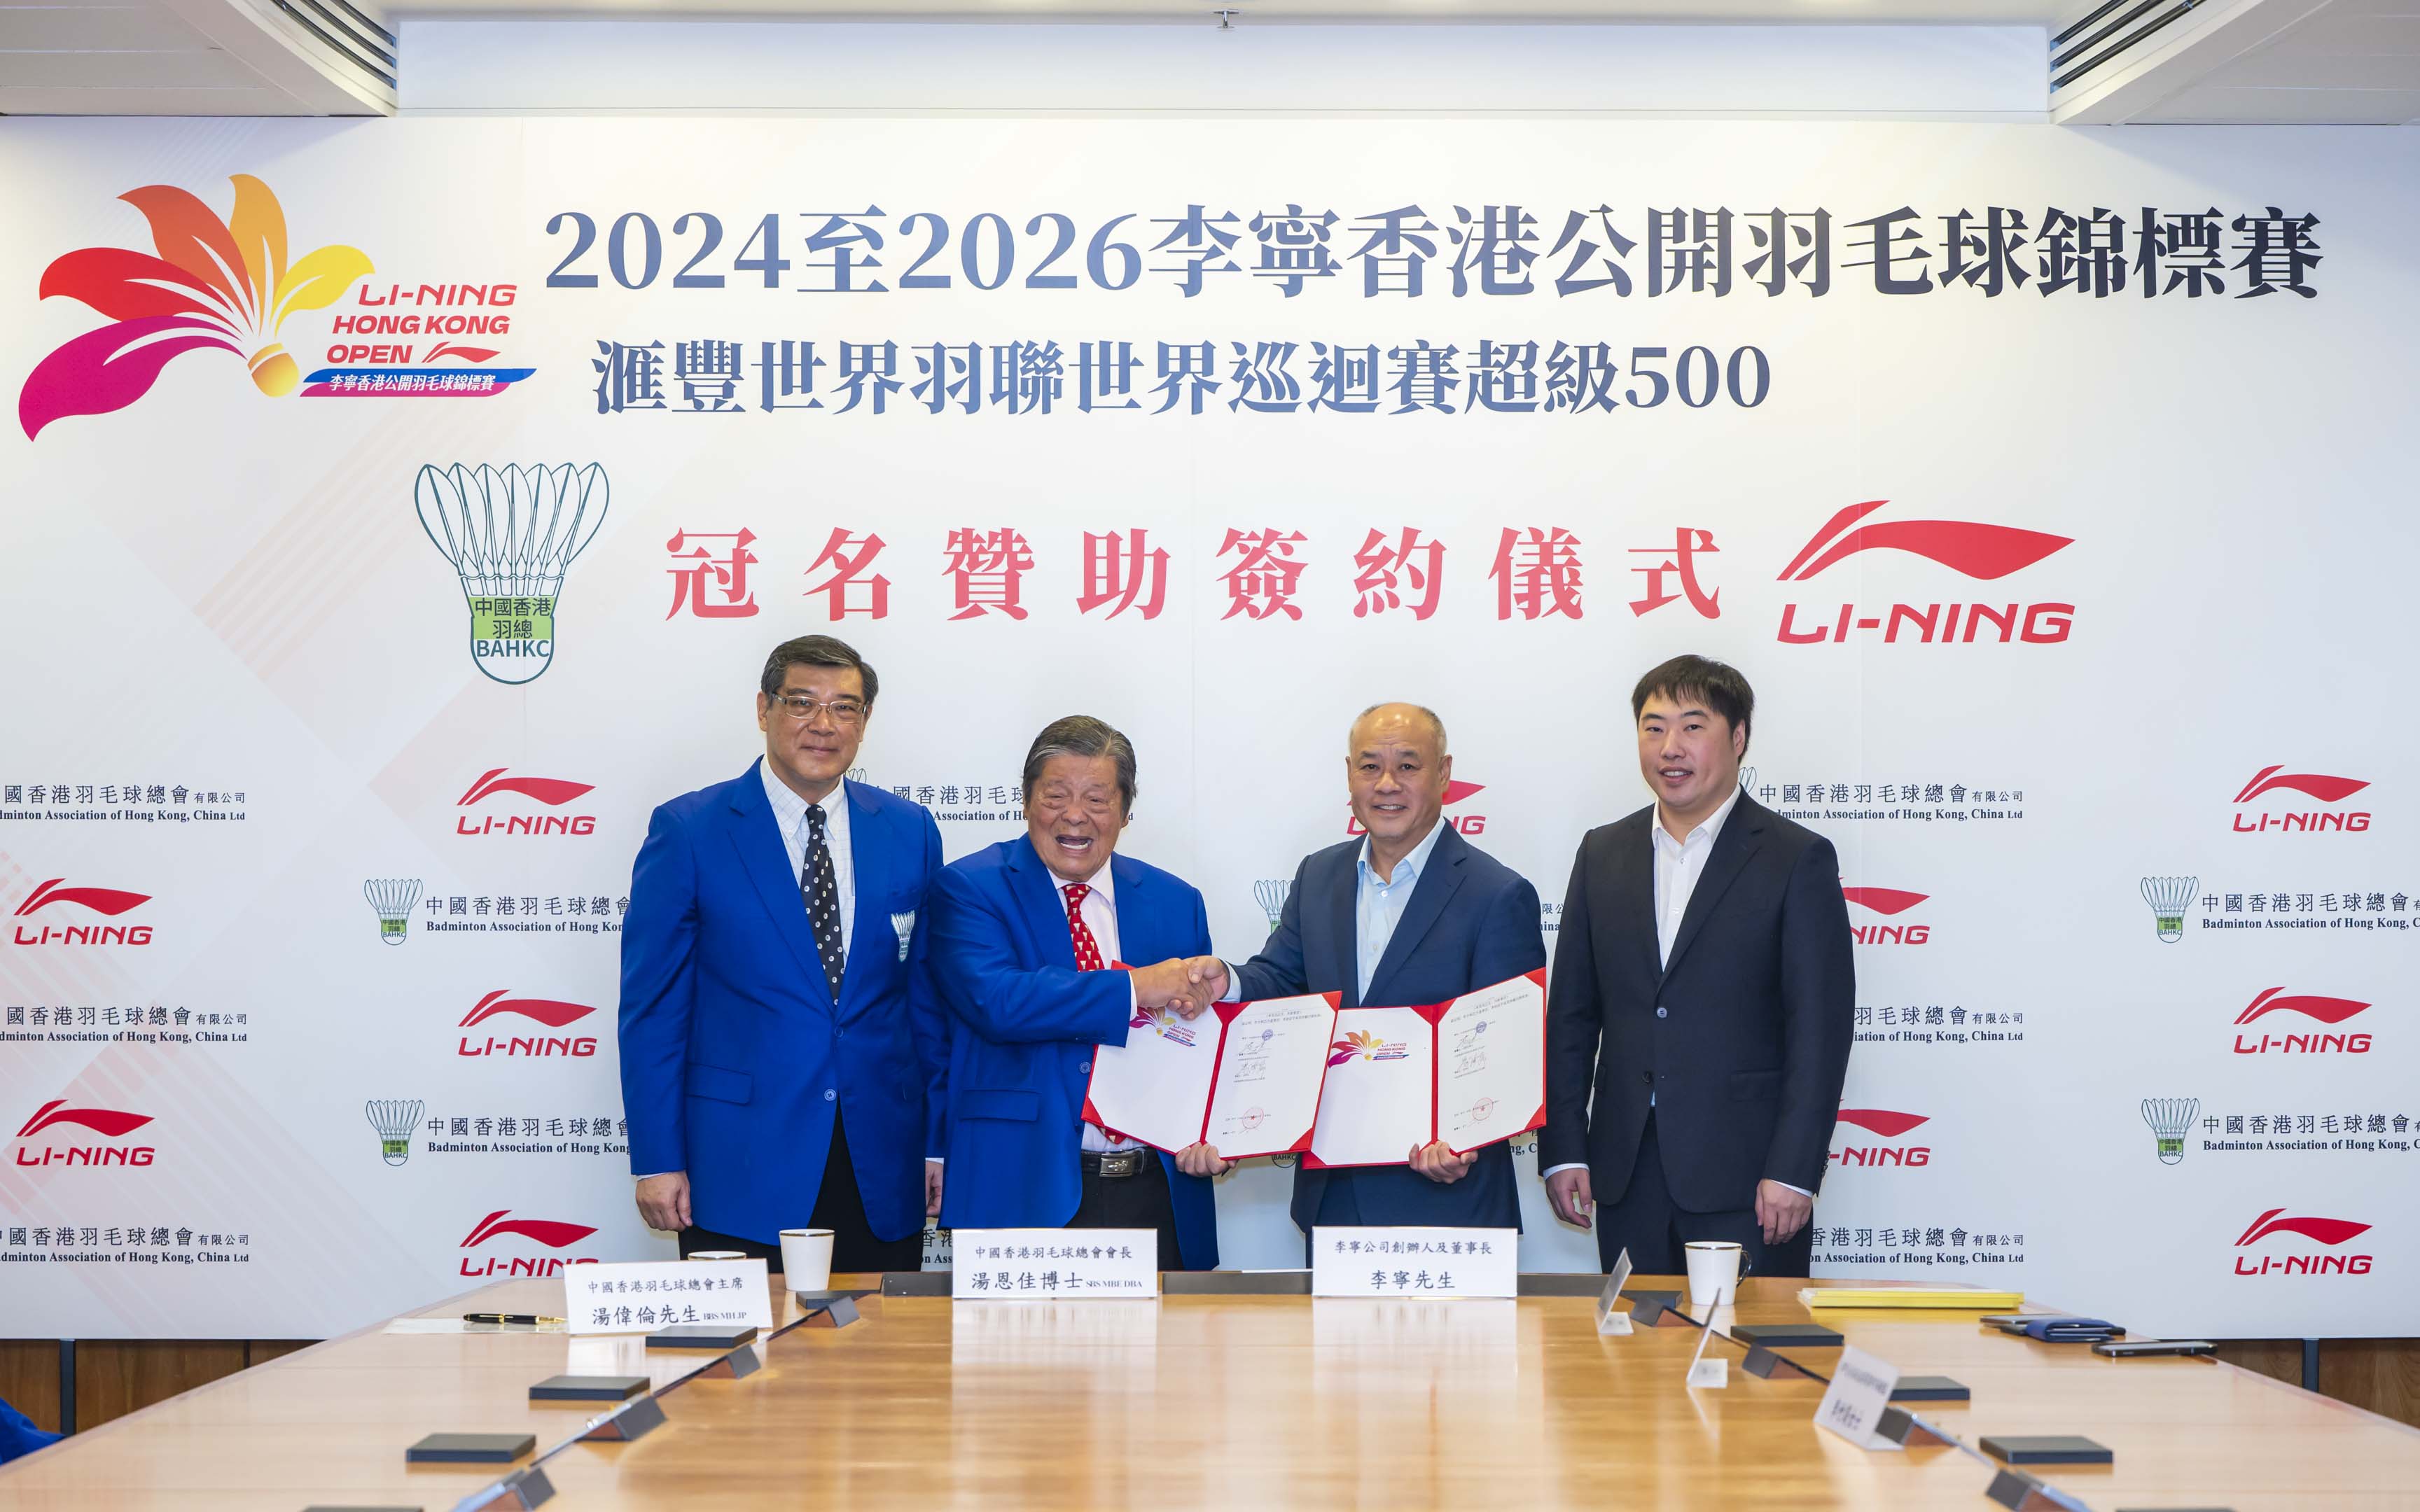 LI-NING Hong Kong Open Badminton Championships 2024-2026 Signing Ceremony